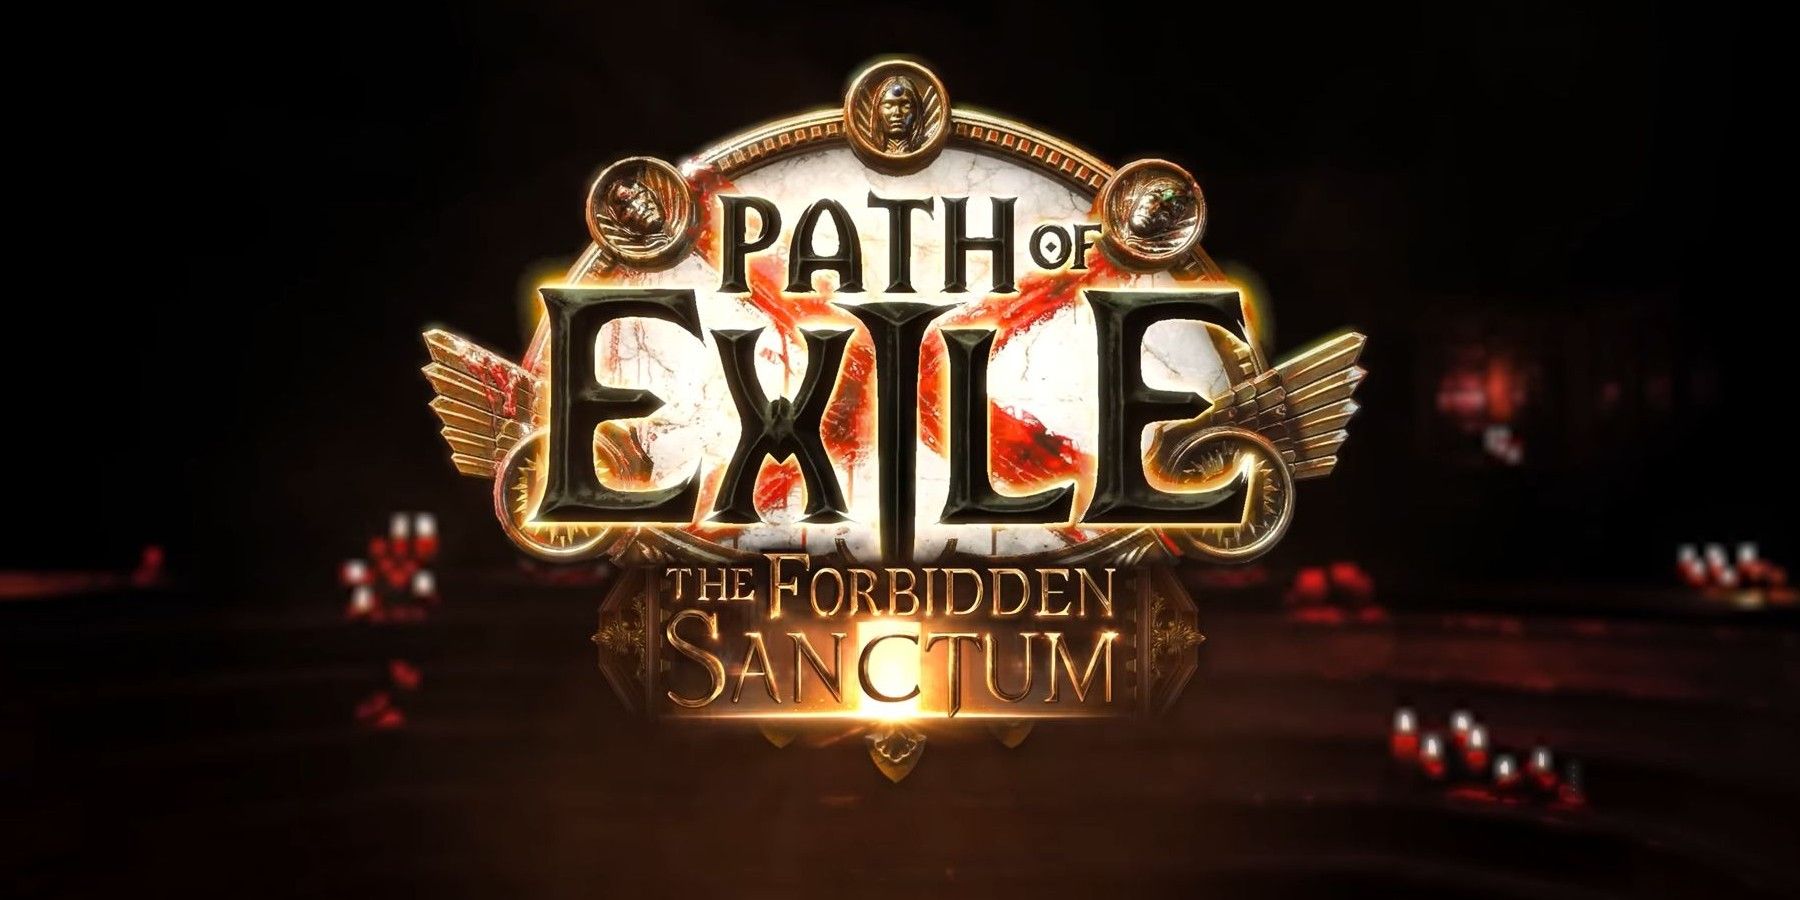 Path of Exile The Forbidden Sanctum logo over a dark spooky room